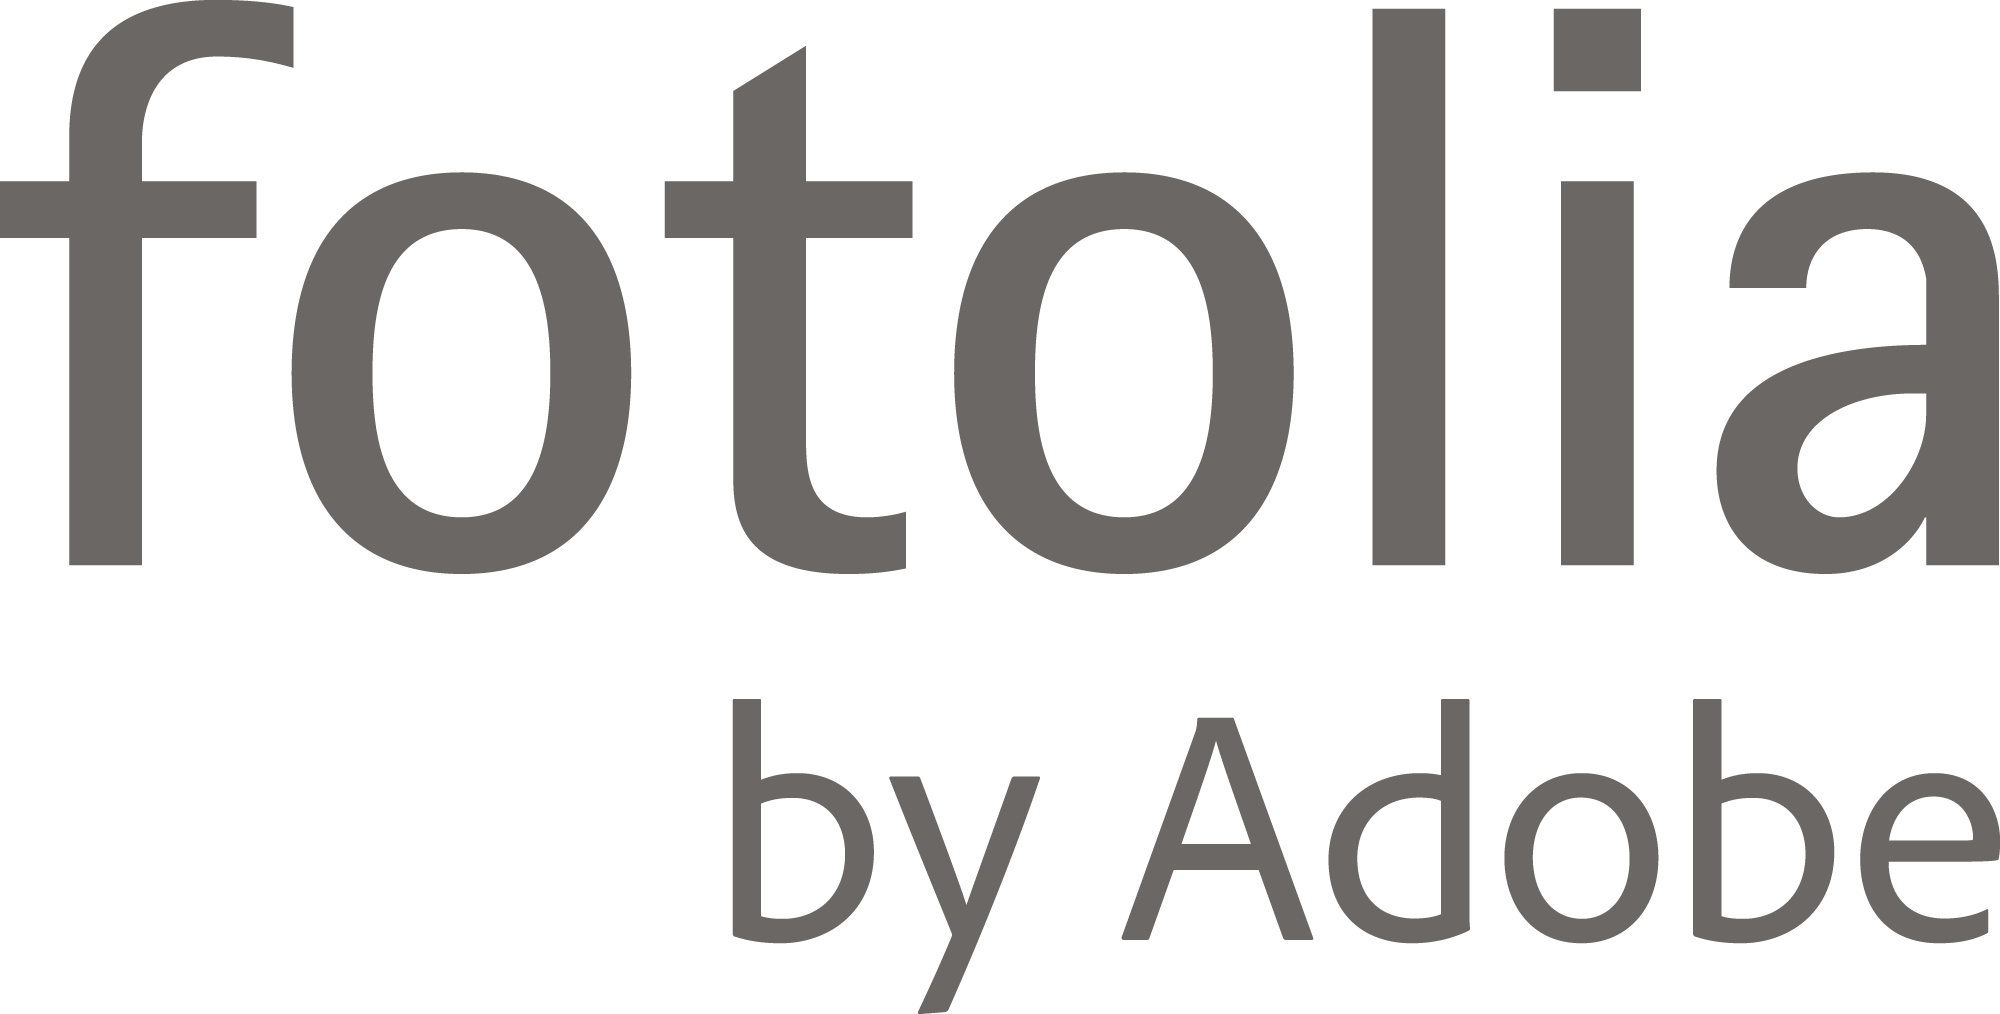 Fotolia-by-adobe-logo